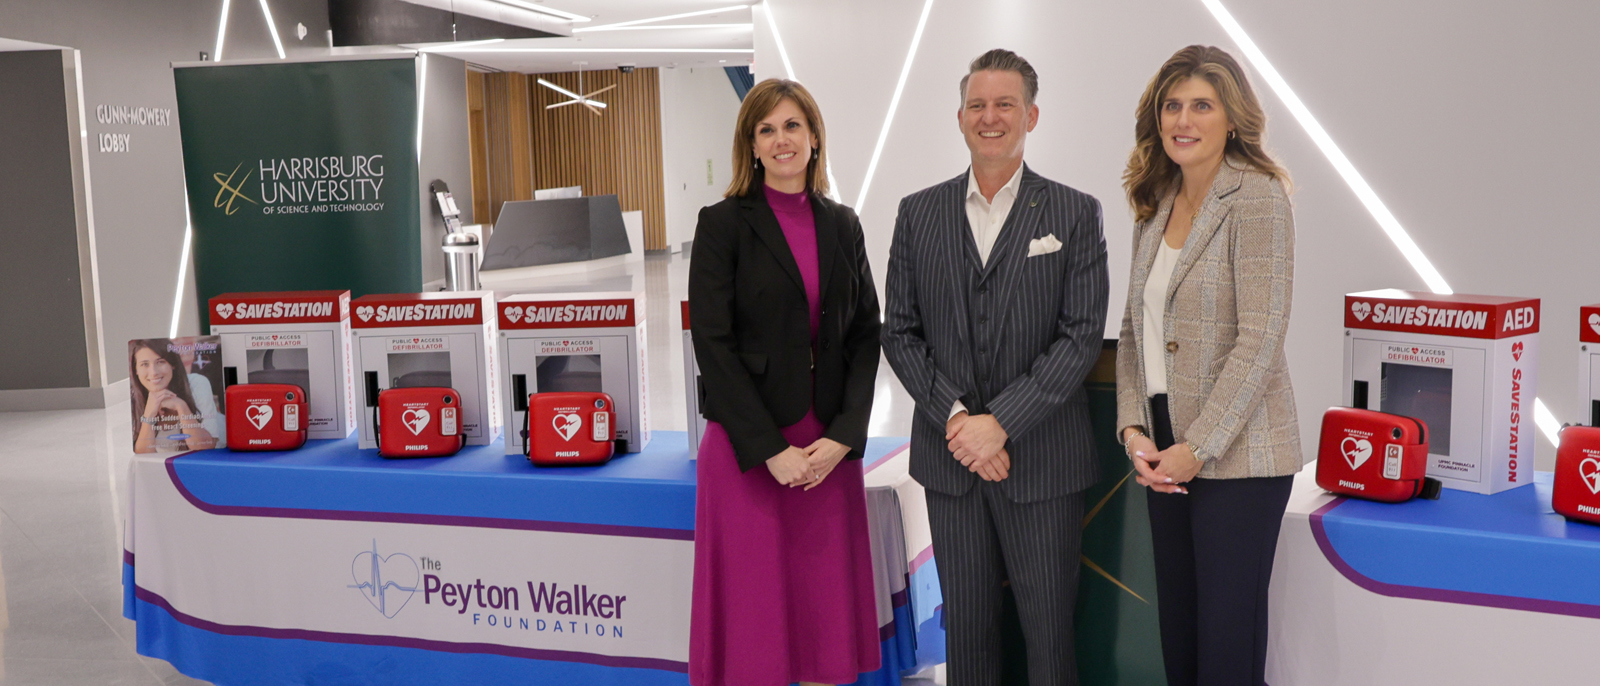 Peyton Walker Foundation Partners With UPMC Pinnacle Foundation to Donate Life-Saving AEDs to Harrisburg University